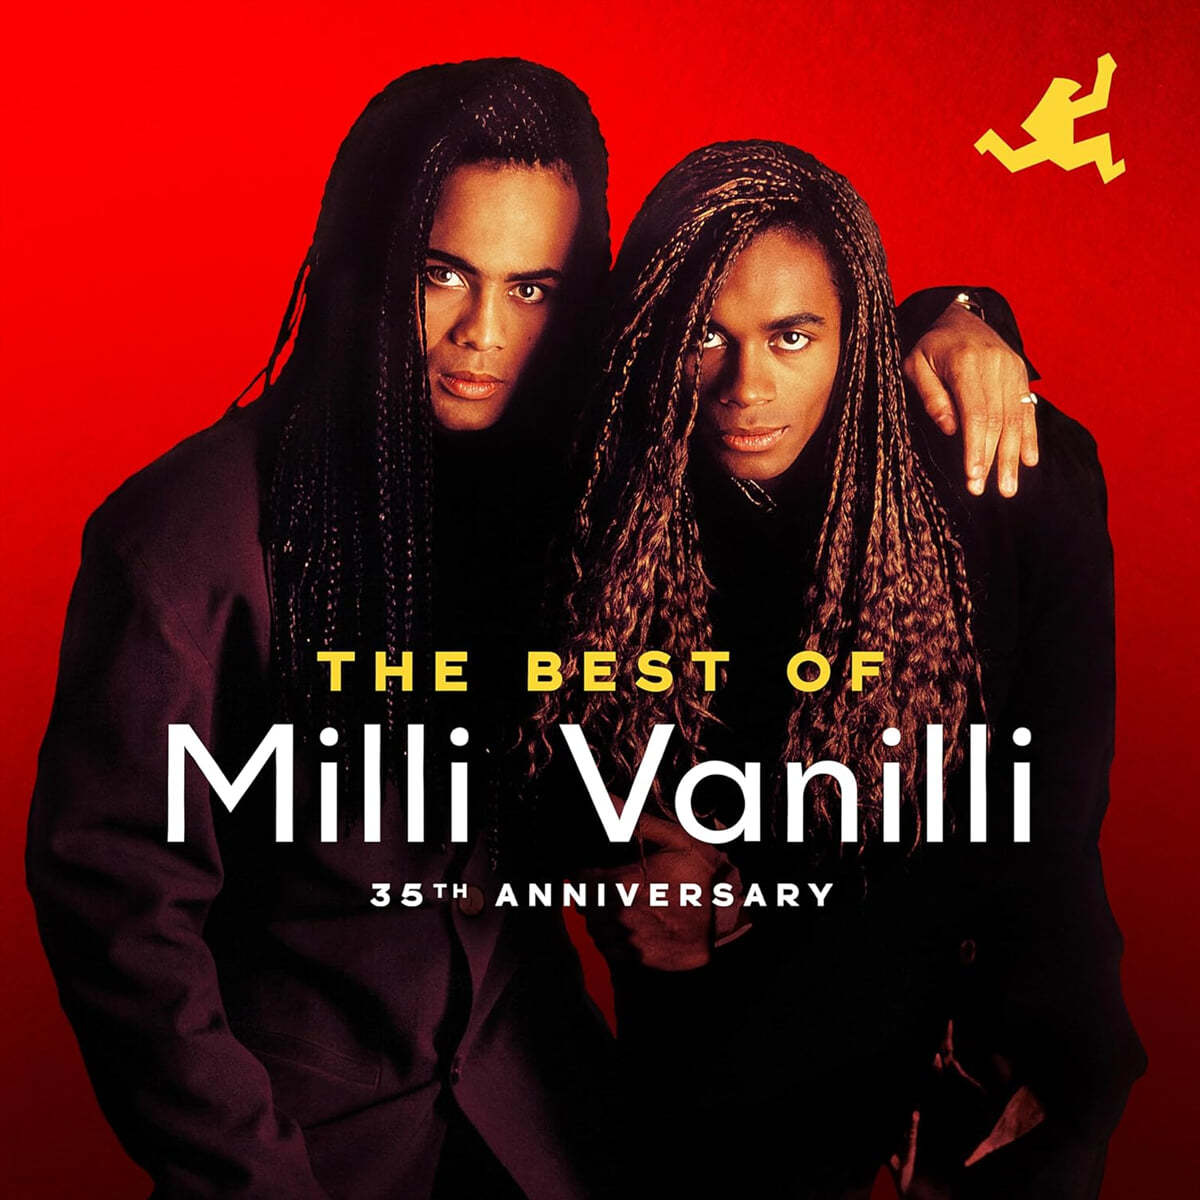 Milli Vanilli (밀리 바닐리) - The Best of Milli Vanilli [크림 컬러 2LP]